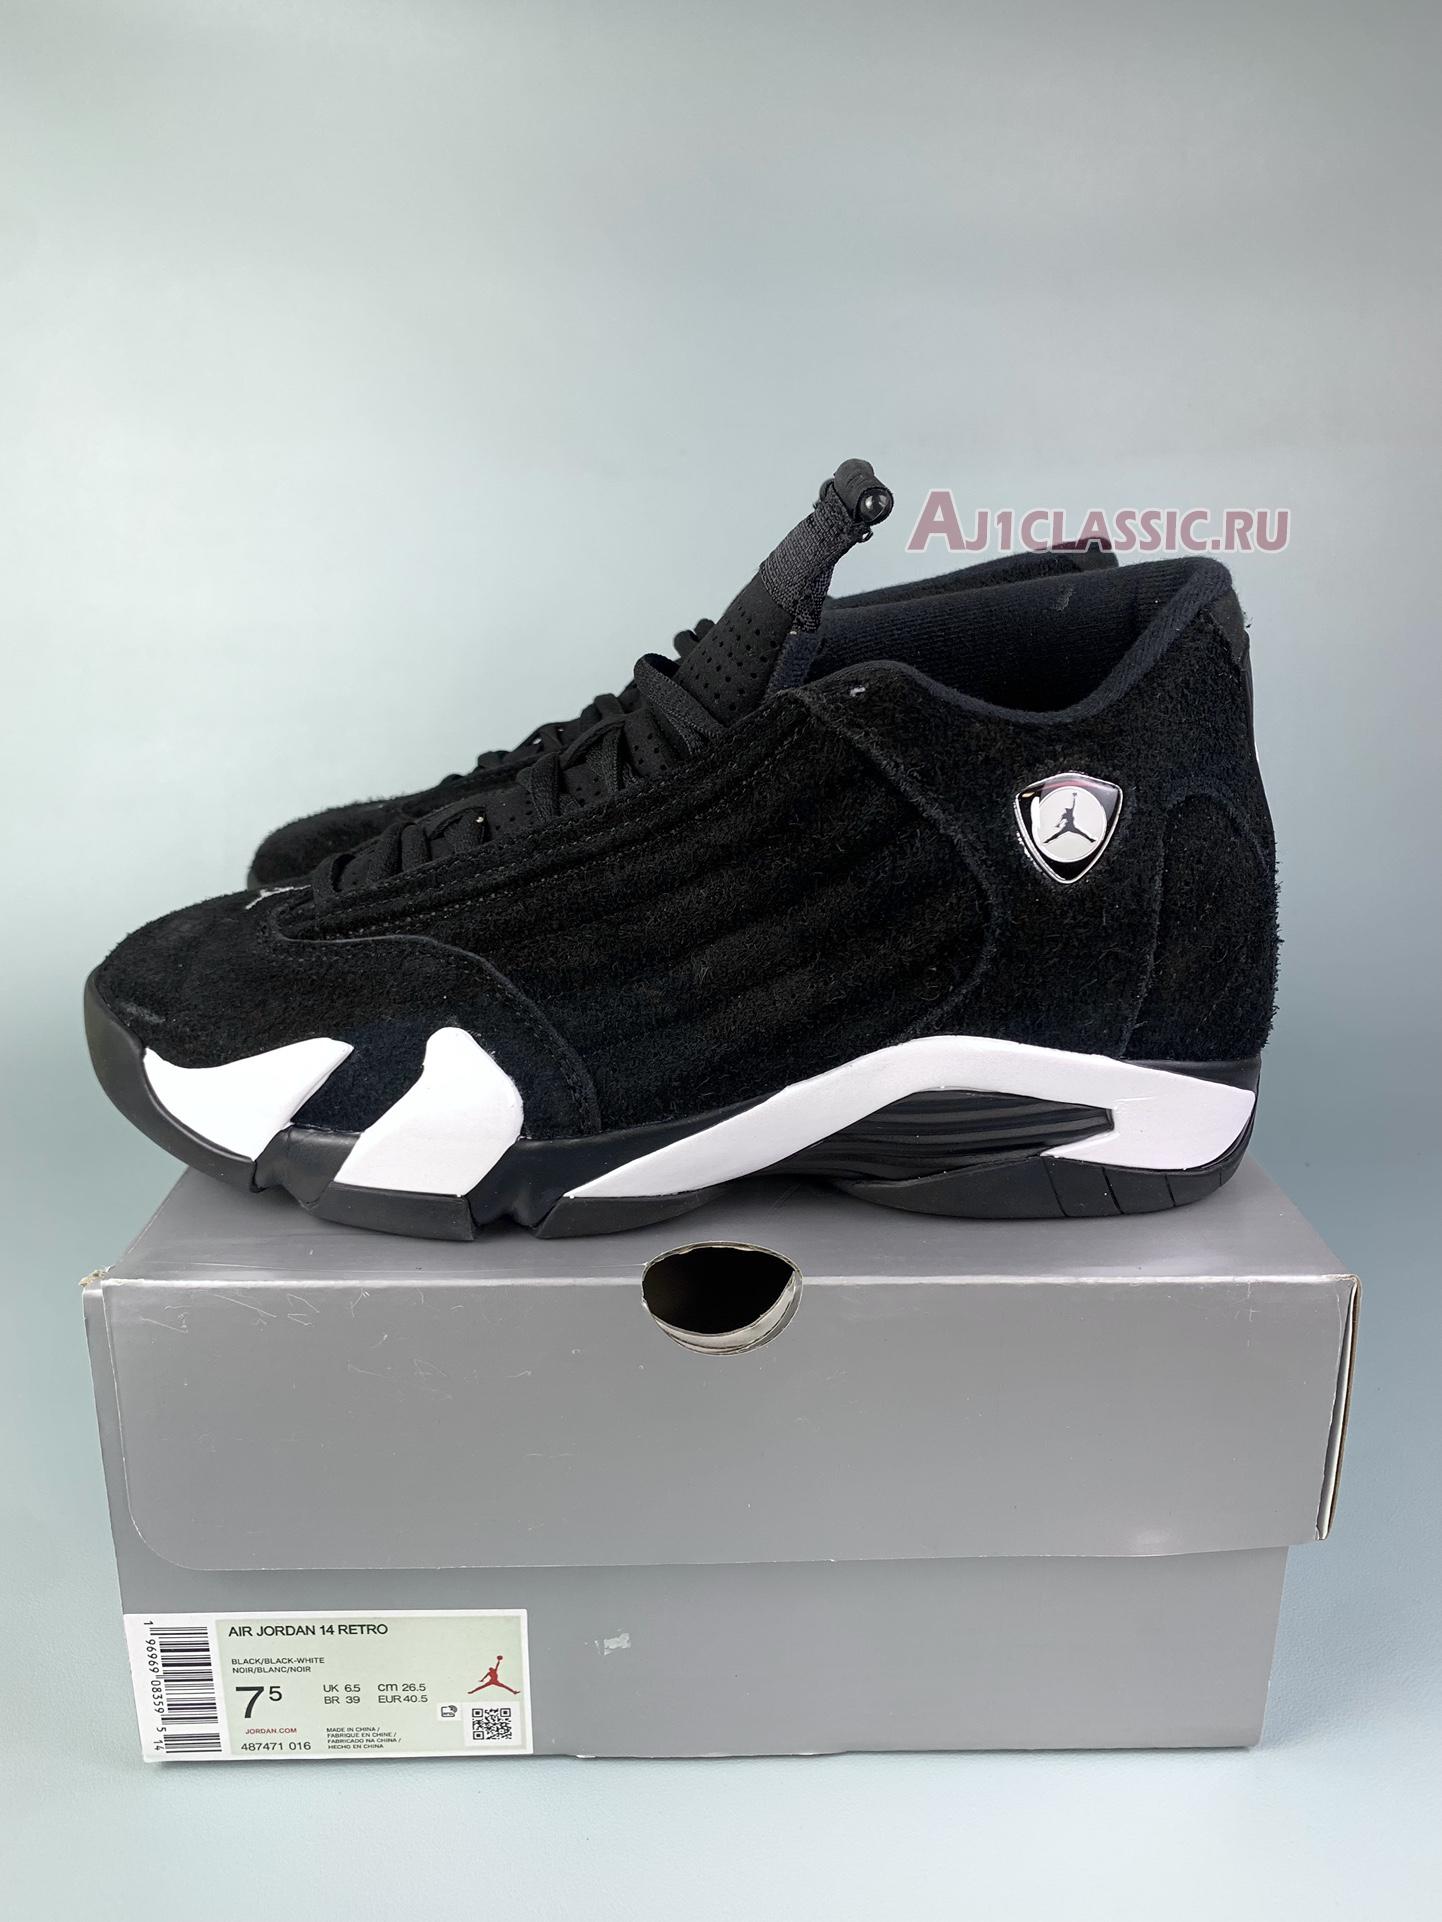 Air Jordan 14 Retro Black White 487471-016 Black/Black/White/University Red Sneakers